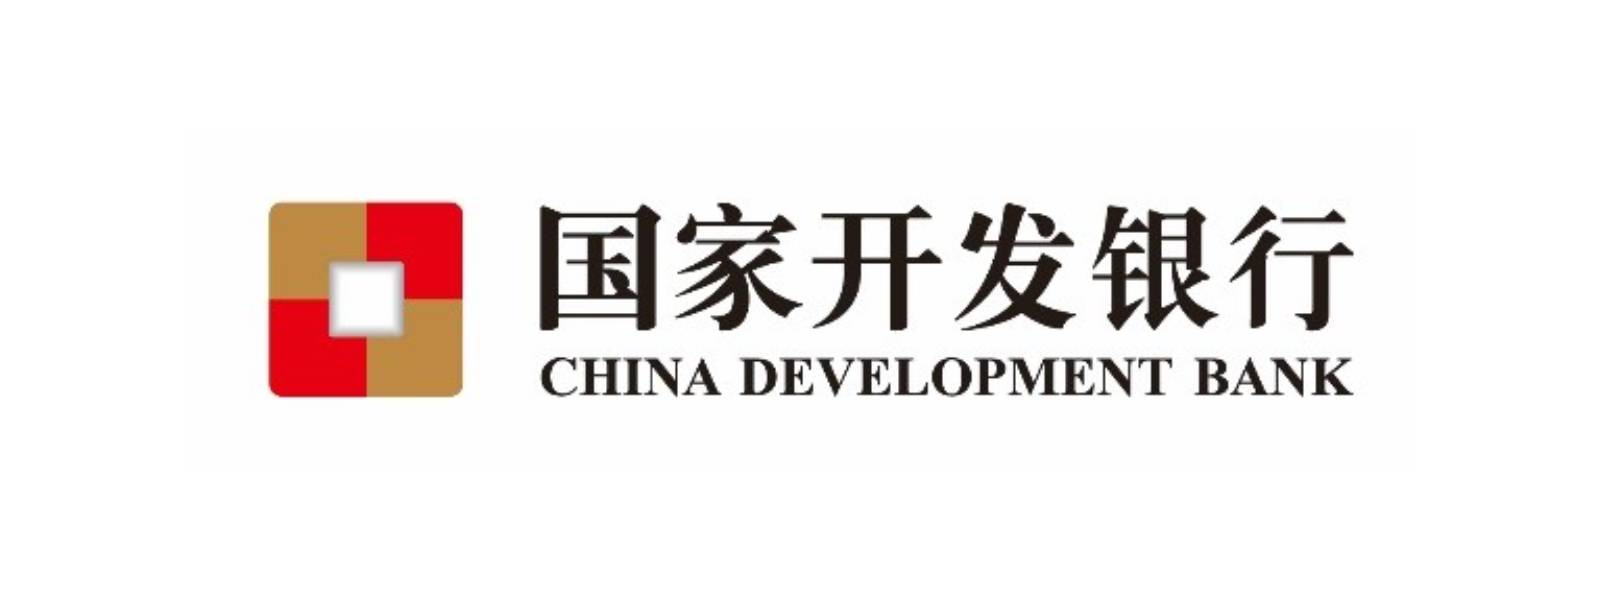 Sri Lanka to obtain USD 140 million loan from China Development Bank